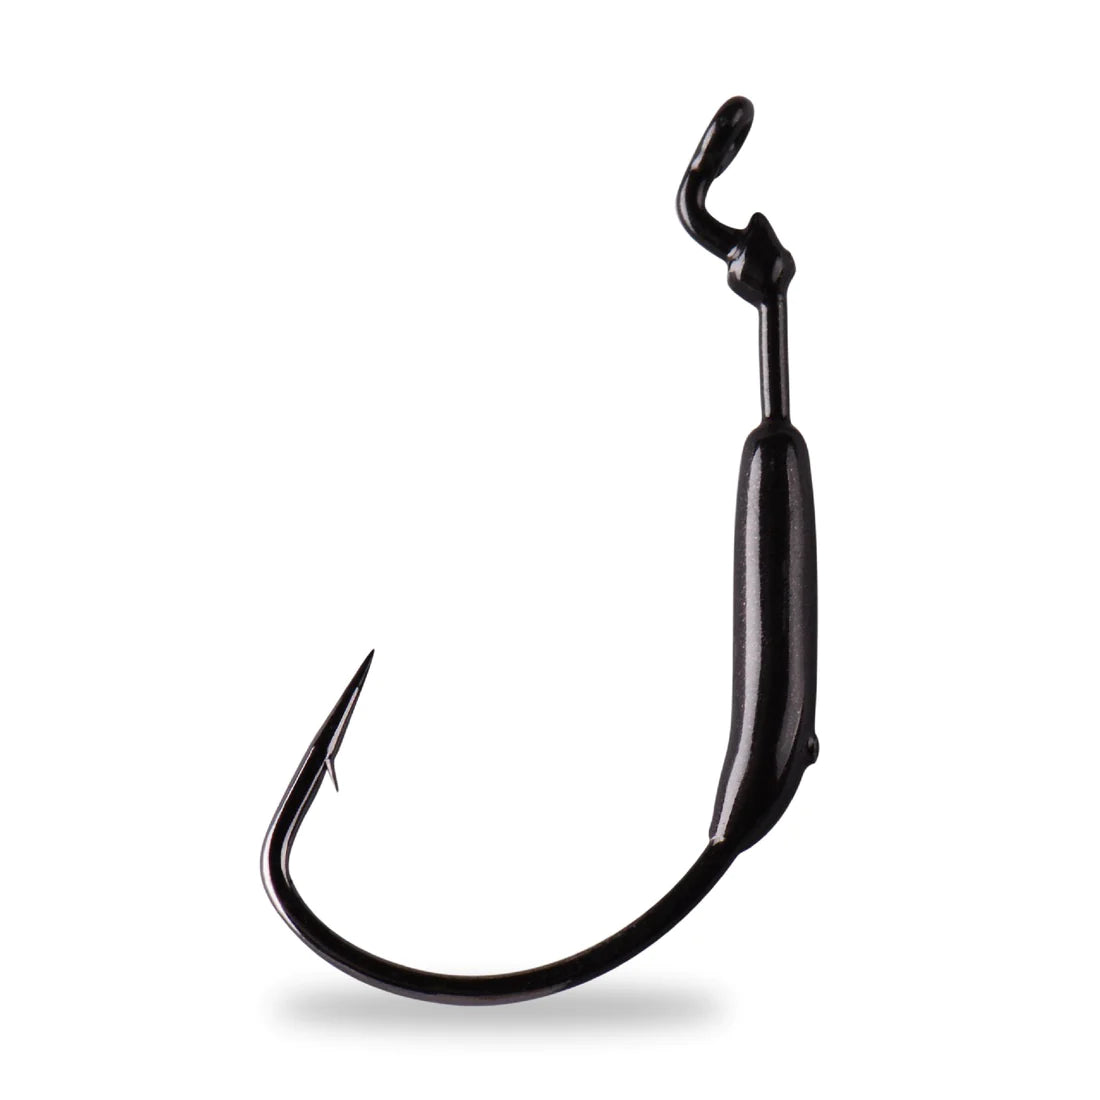 Mustad Weighted KVD Grip Pin® Hook (3pk)